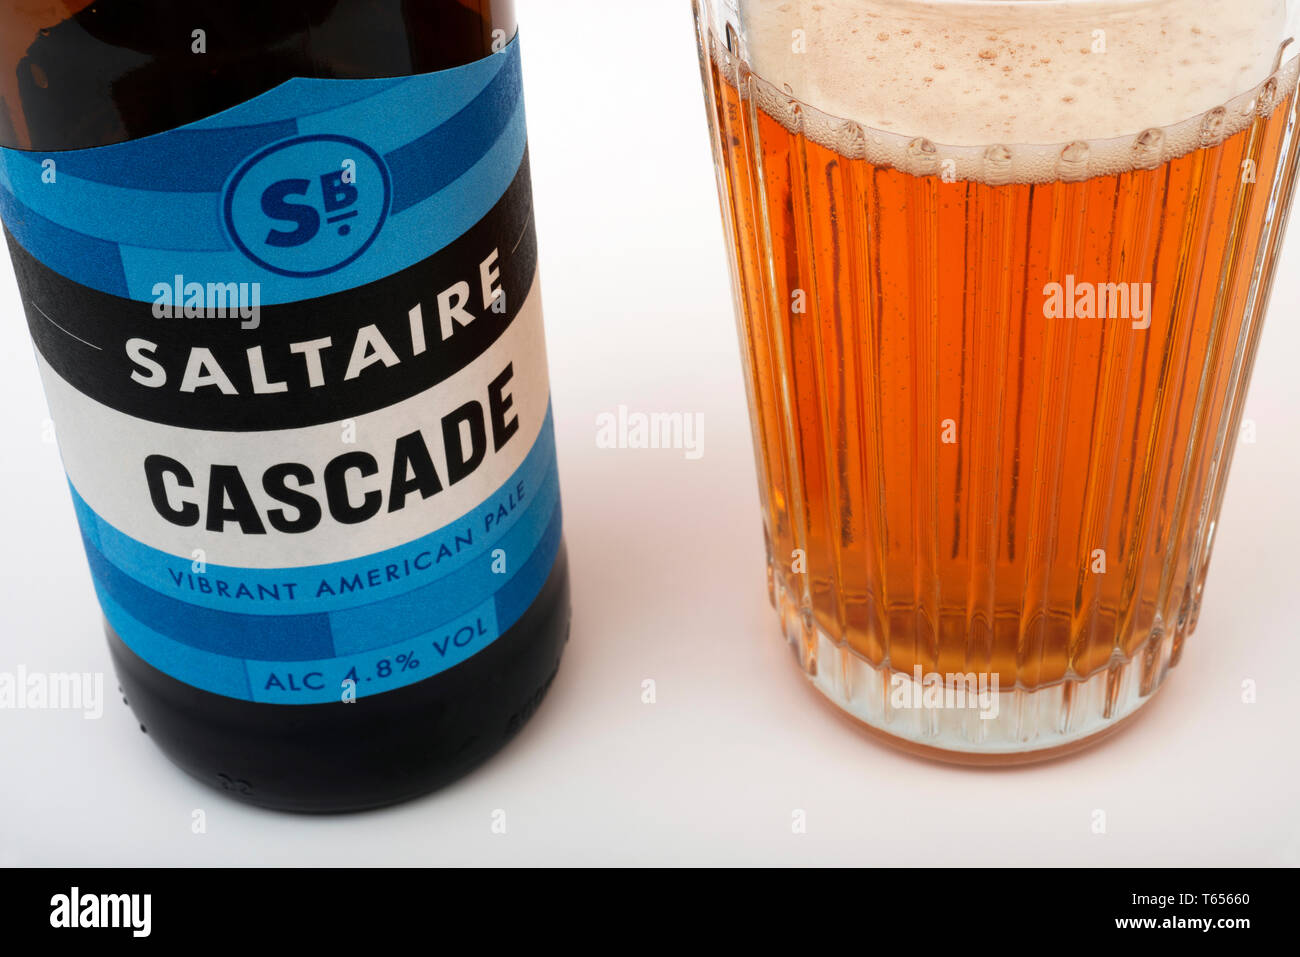 SB Saltaire Cascade beer Stock Photo